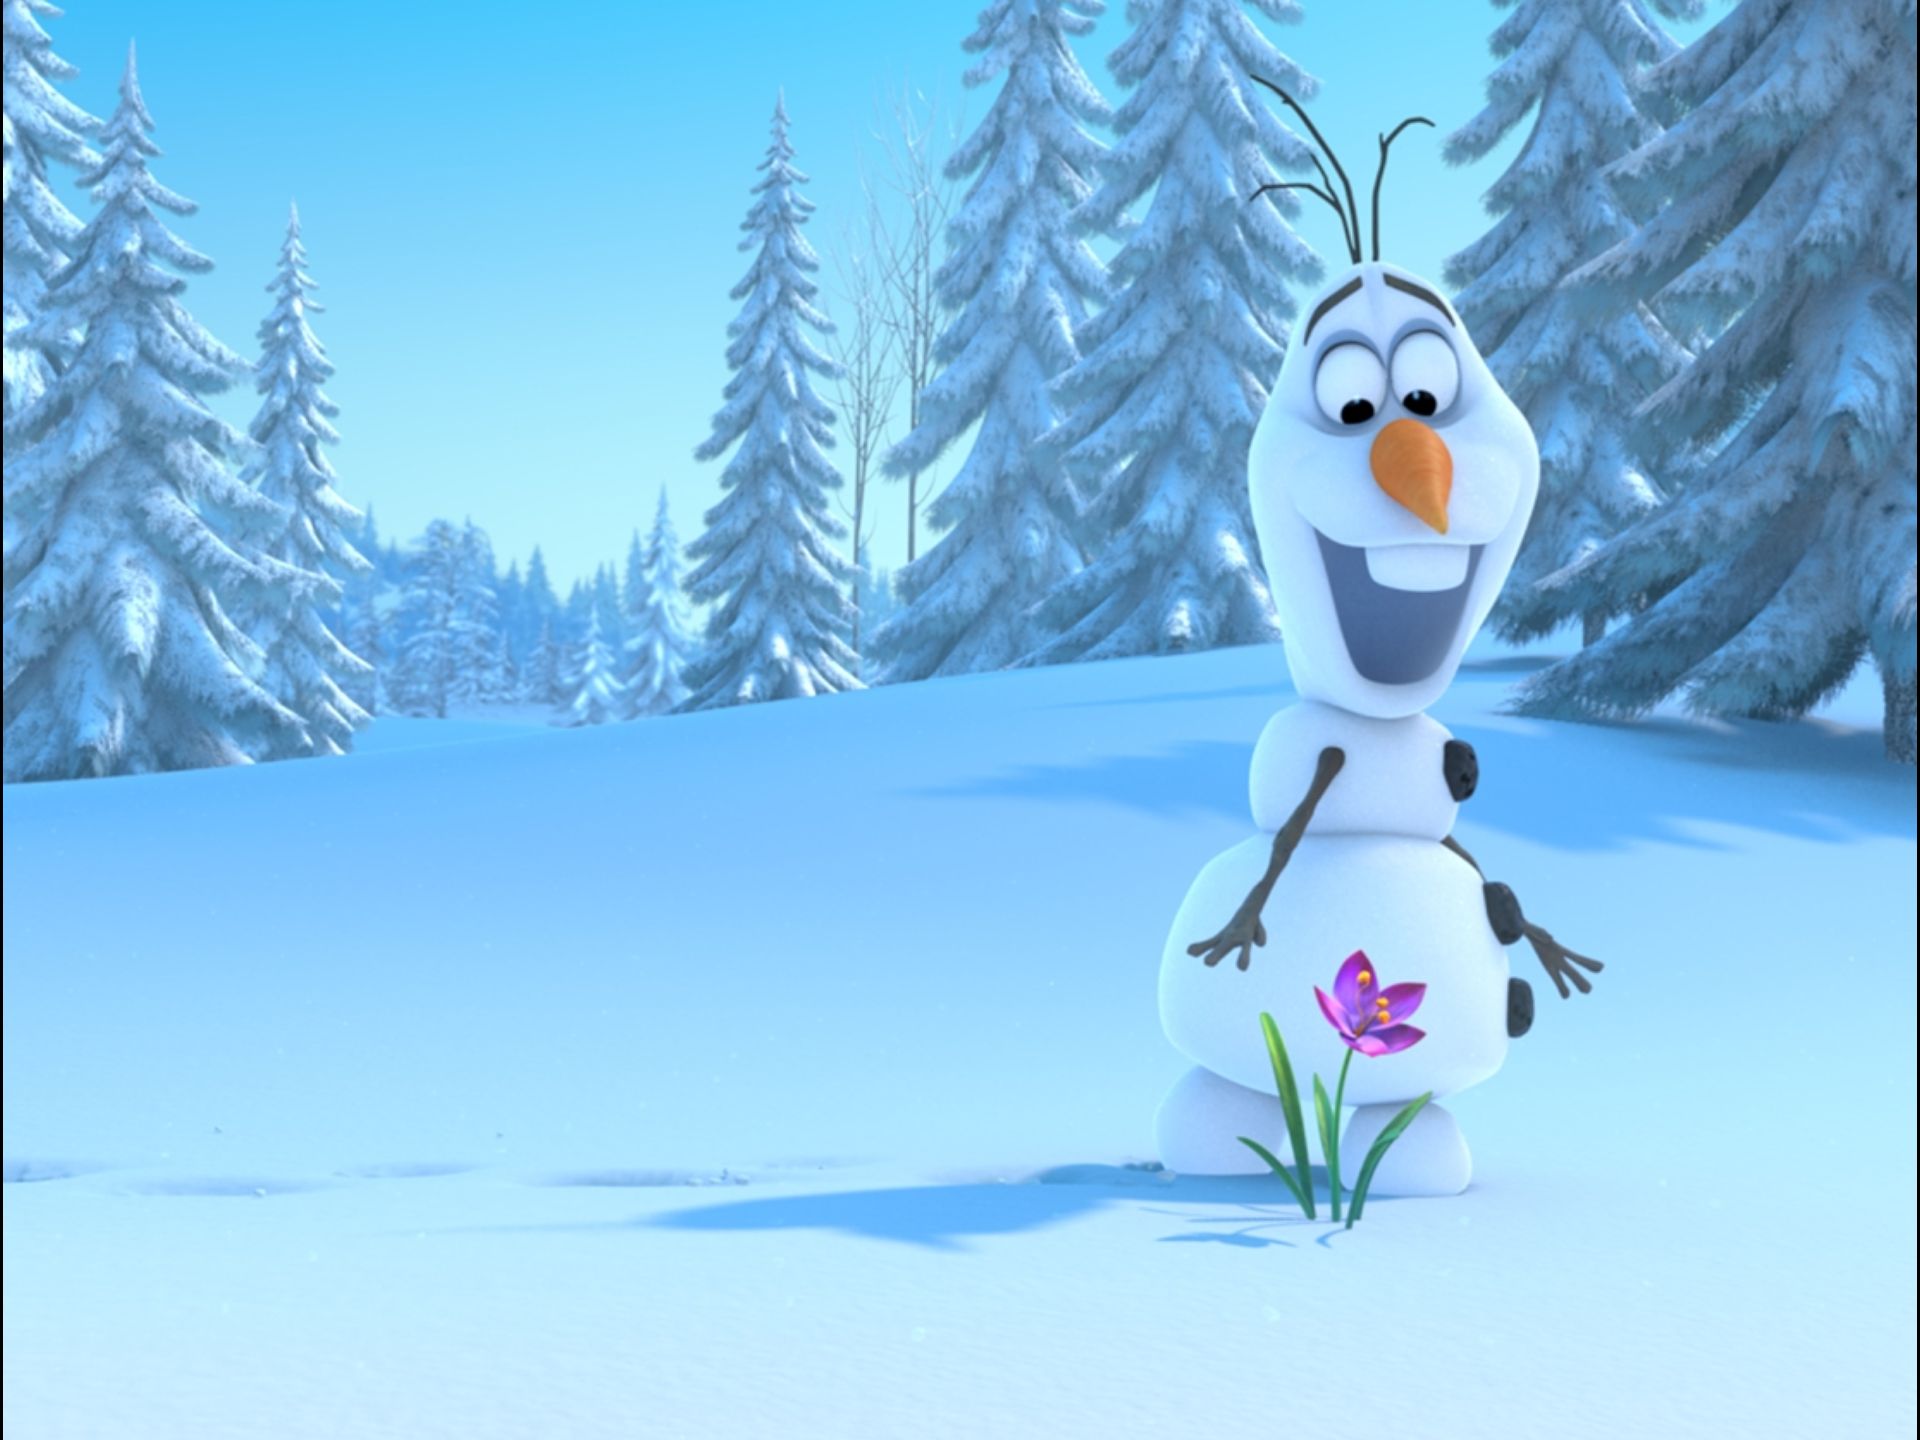 Disney Frozen Olaf HD Wallpaper Image for Tablet - Cartoons Wallpapers